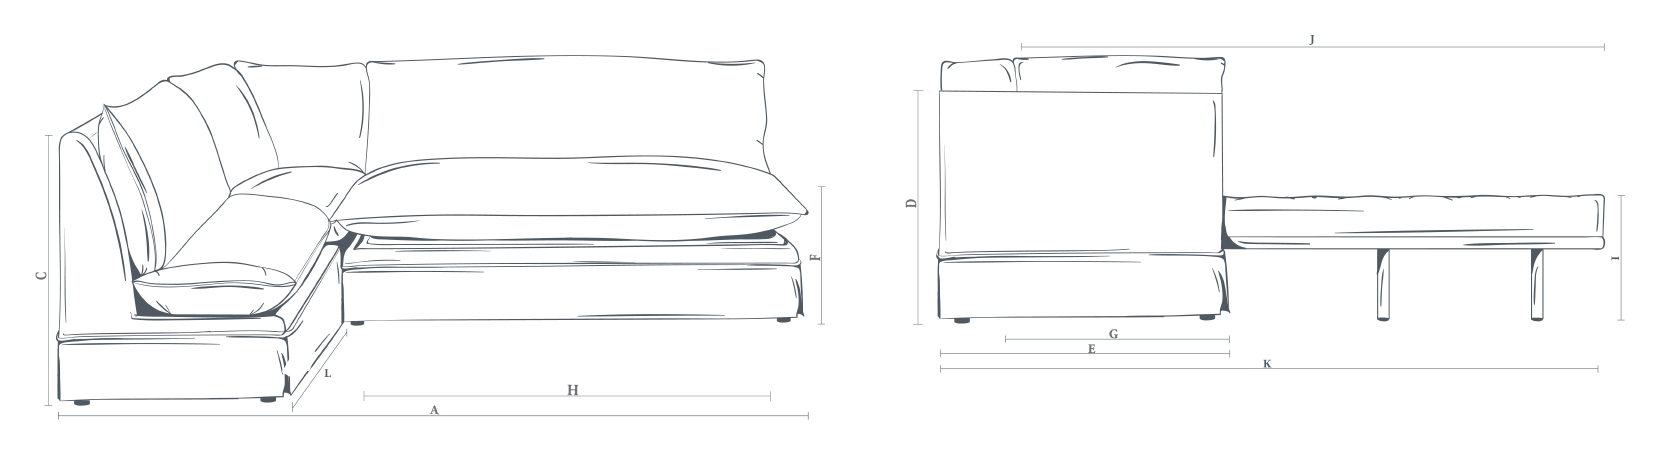 The Deverill 4 Seater Modular Sofa Bed